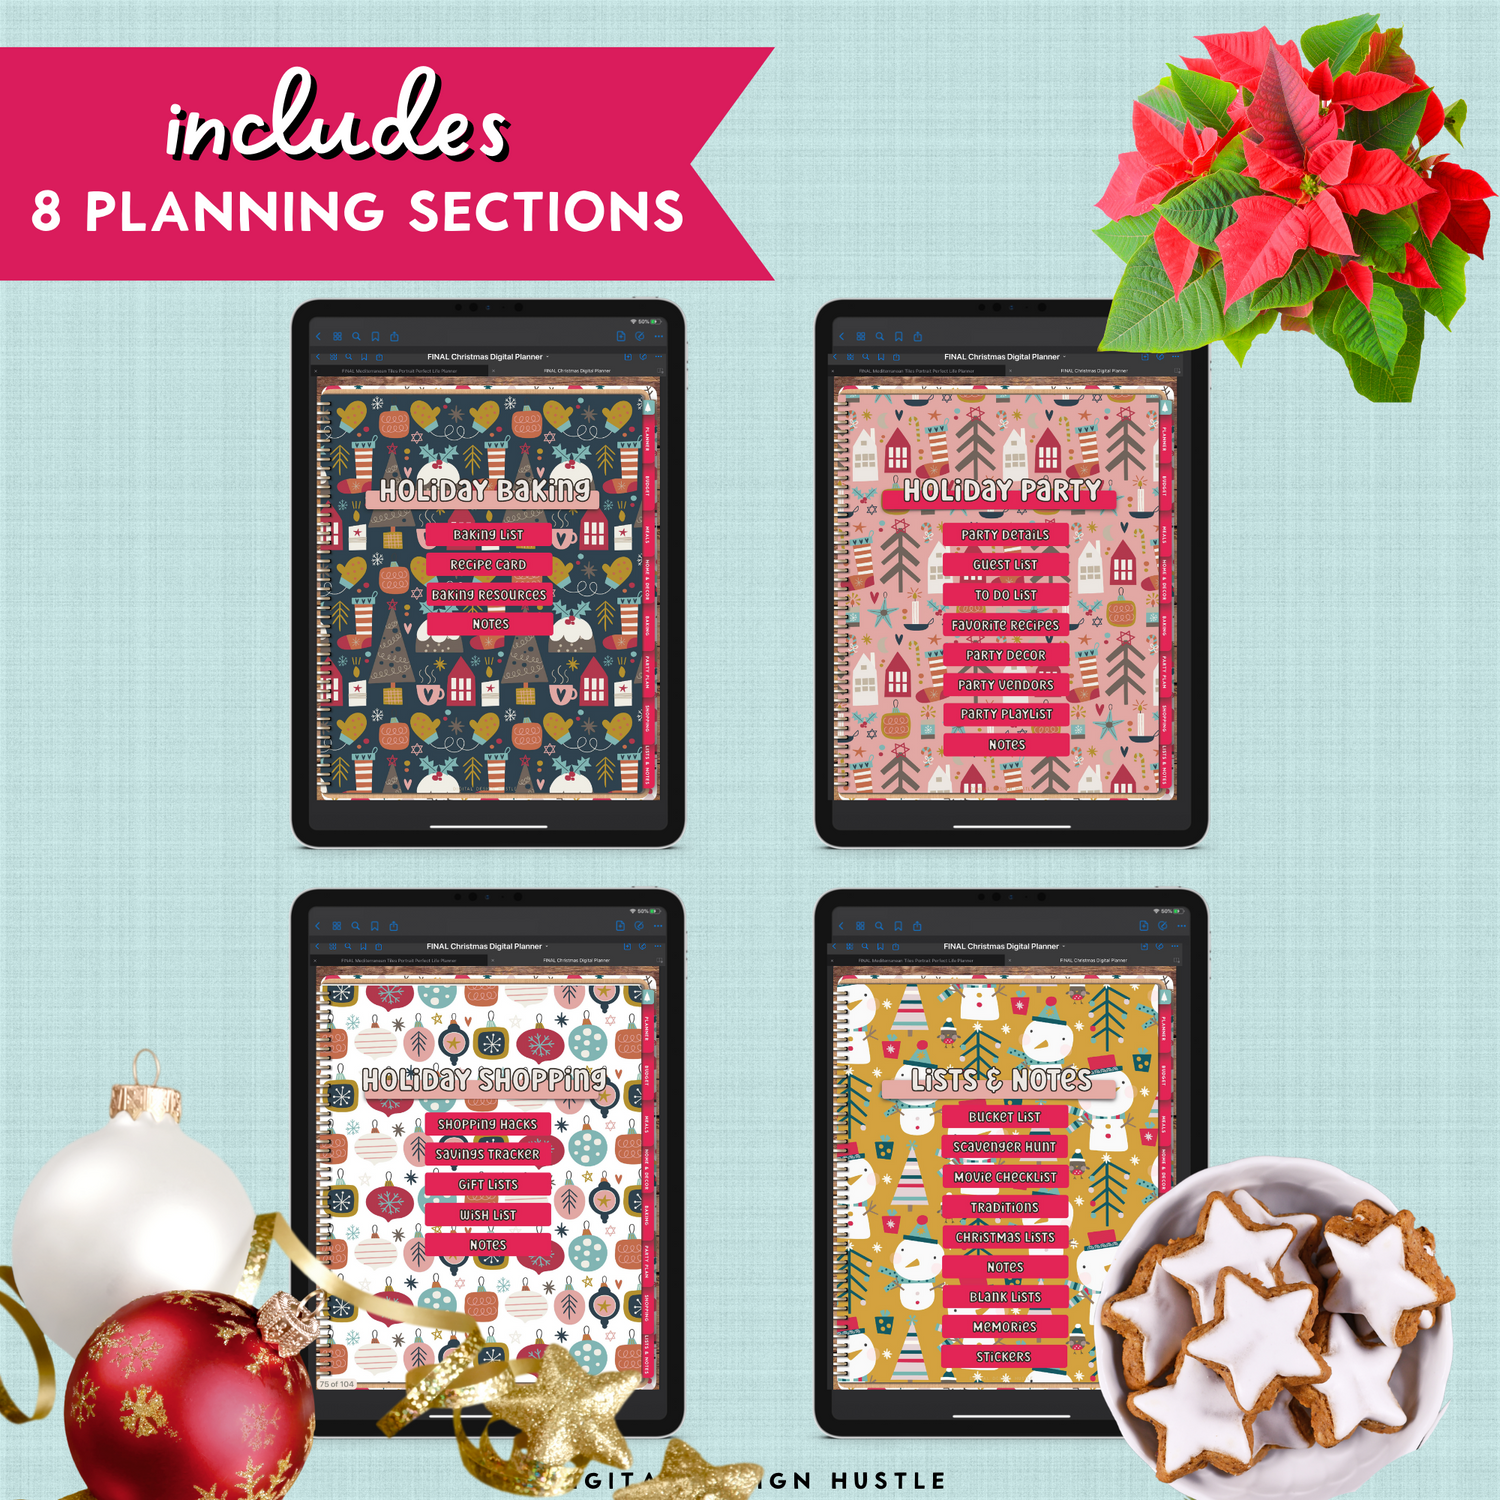 Christmas Digital Memory Book With Digital Stickers - Farm Girl Designs